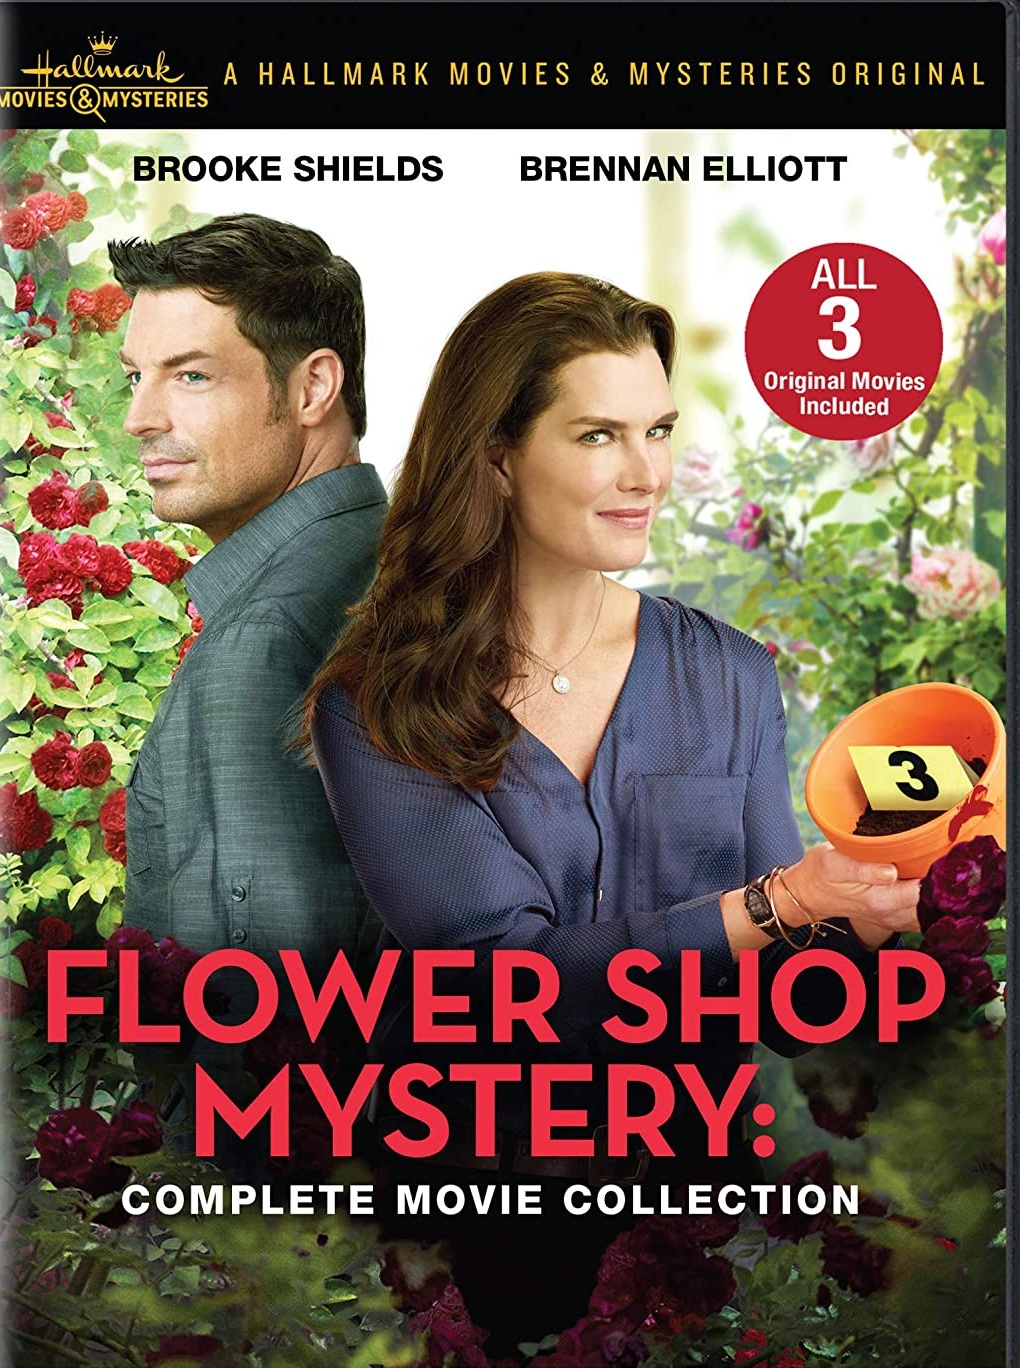 Flower Shop Mysteries (2016)